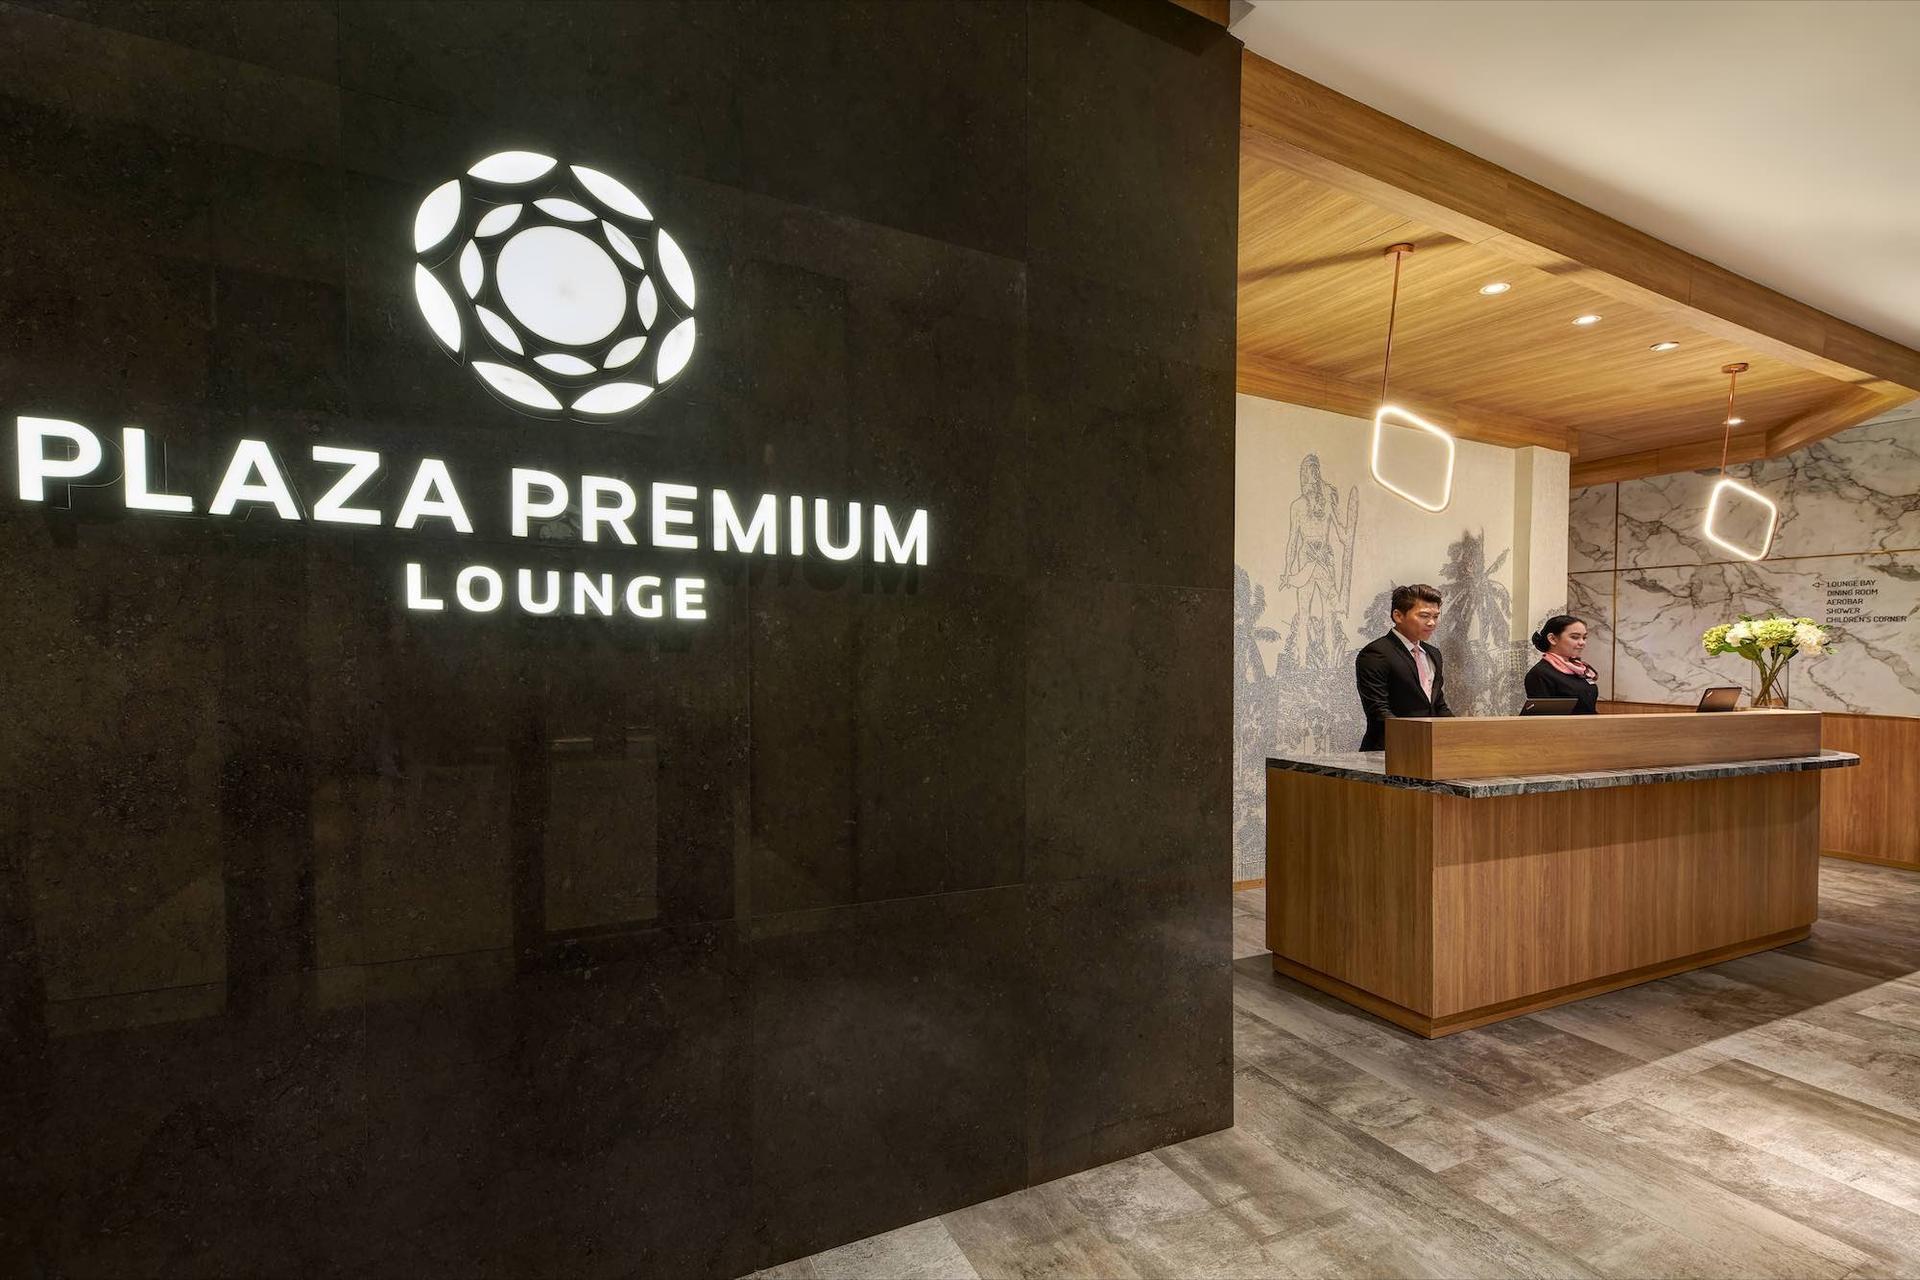 Plaza Premium Lounge image 20 of 22